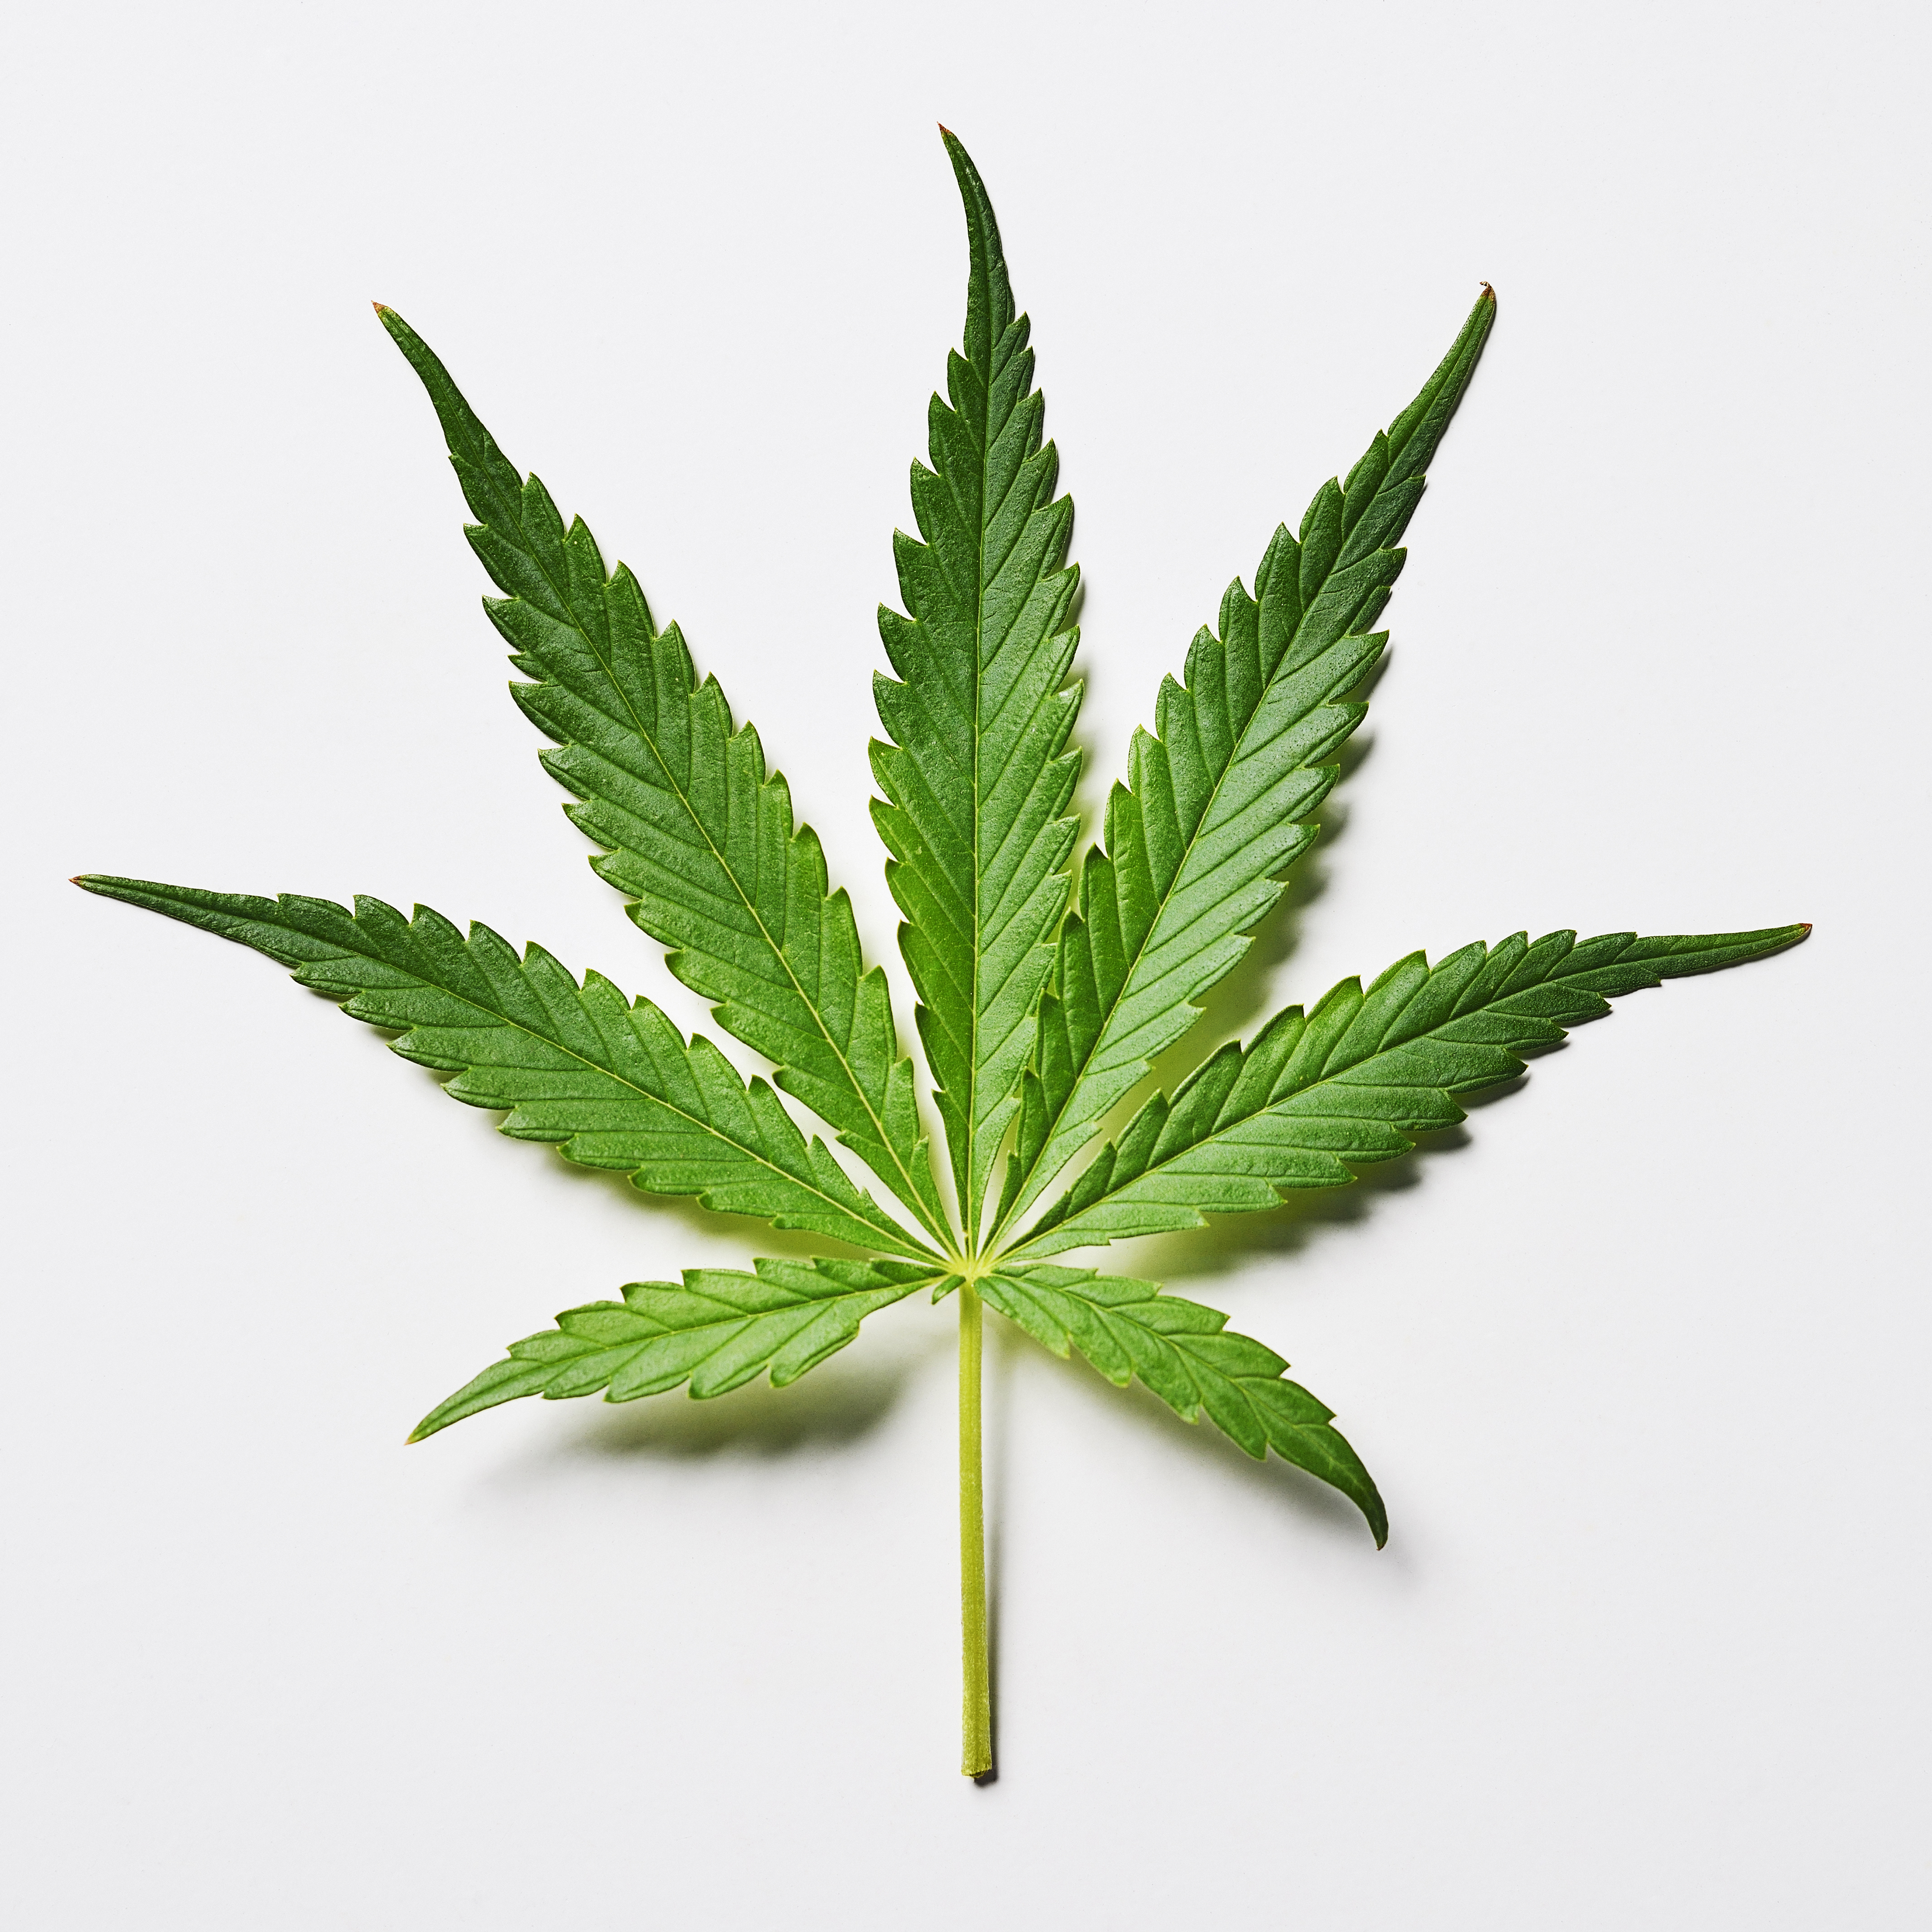 Marijuana leaf on a white background